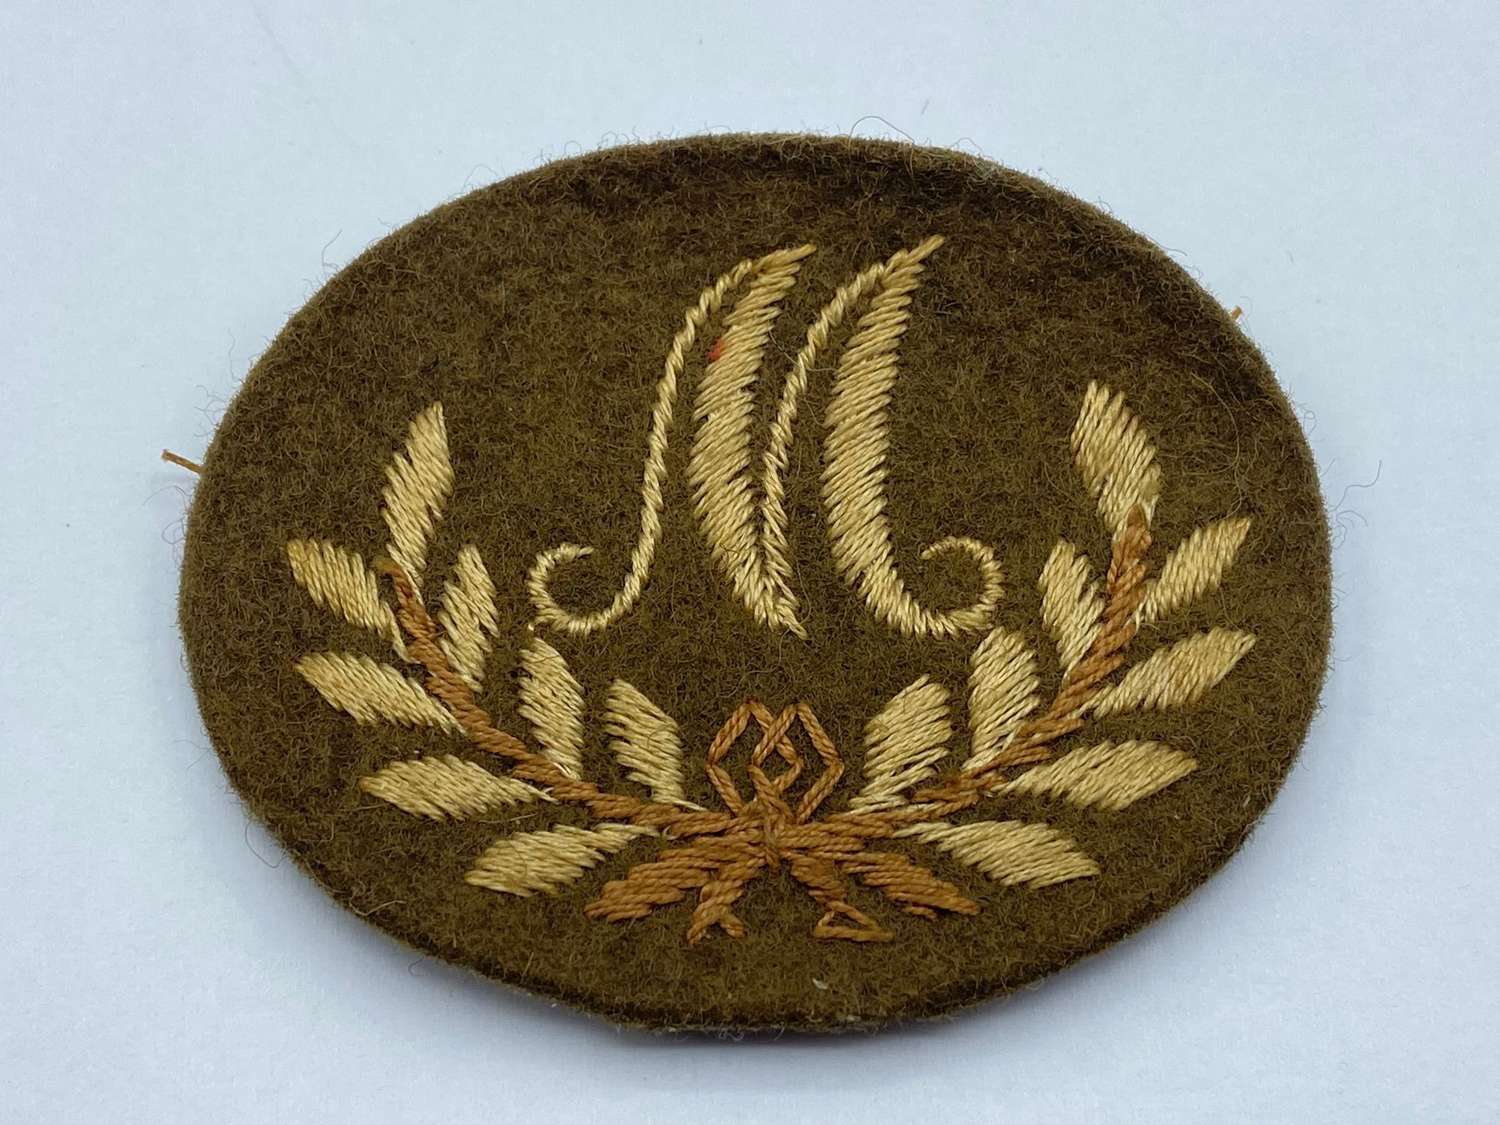 WW2 British Army Trade Badge for Mortar Mortarman Qualification